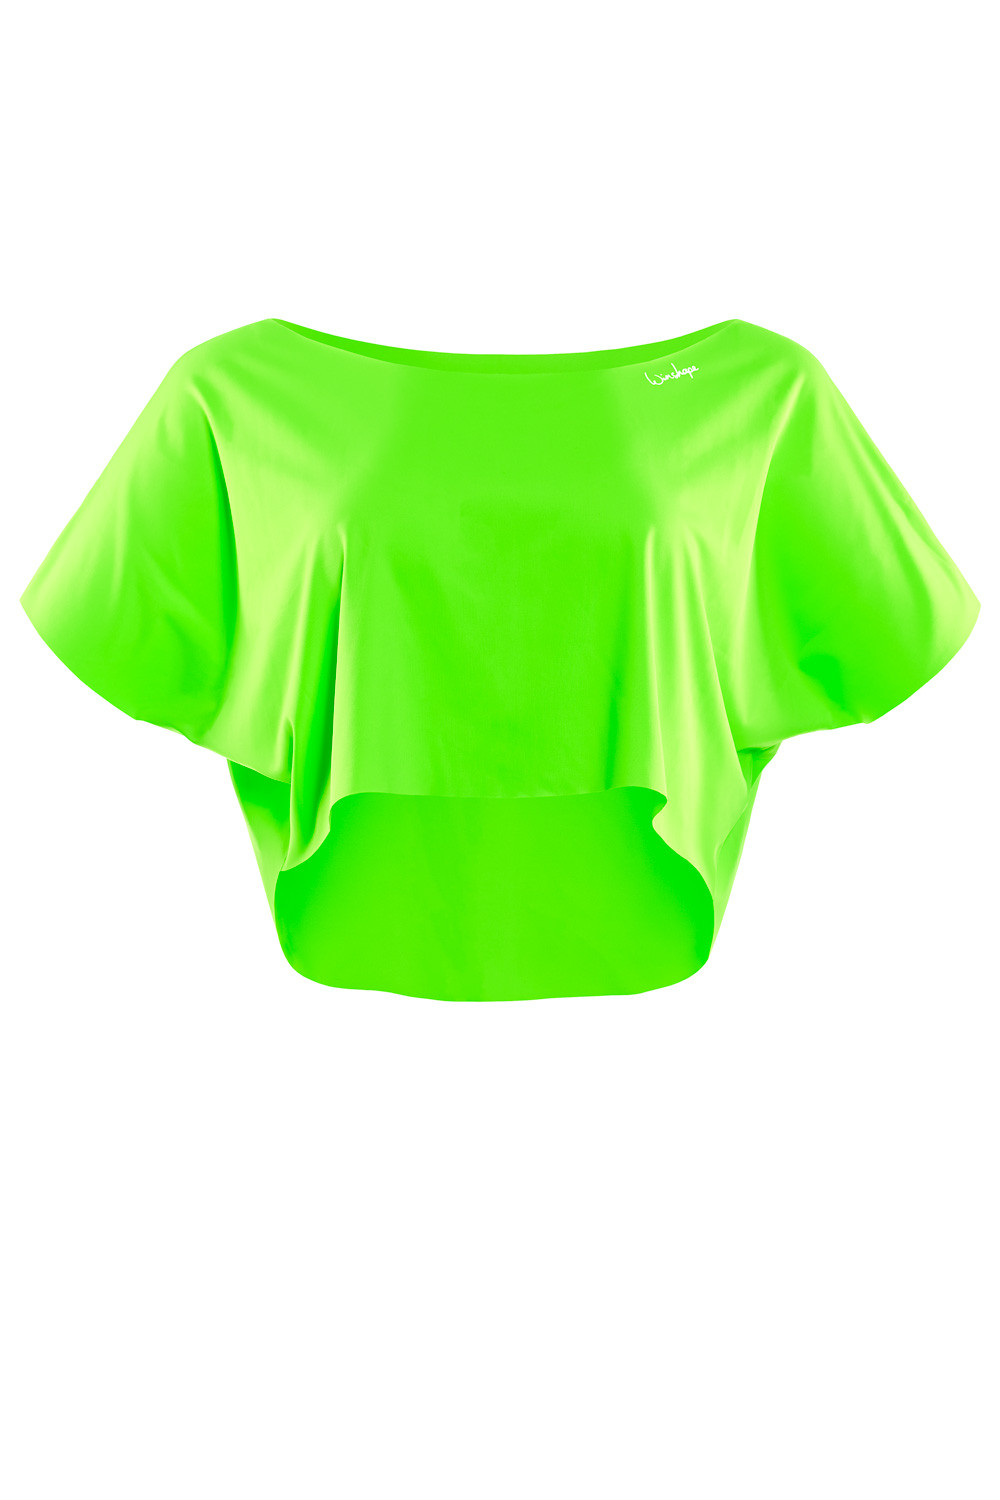 Functional Light Cropped Dance-Top DT104, Style neon Dance grün, Winshape